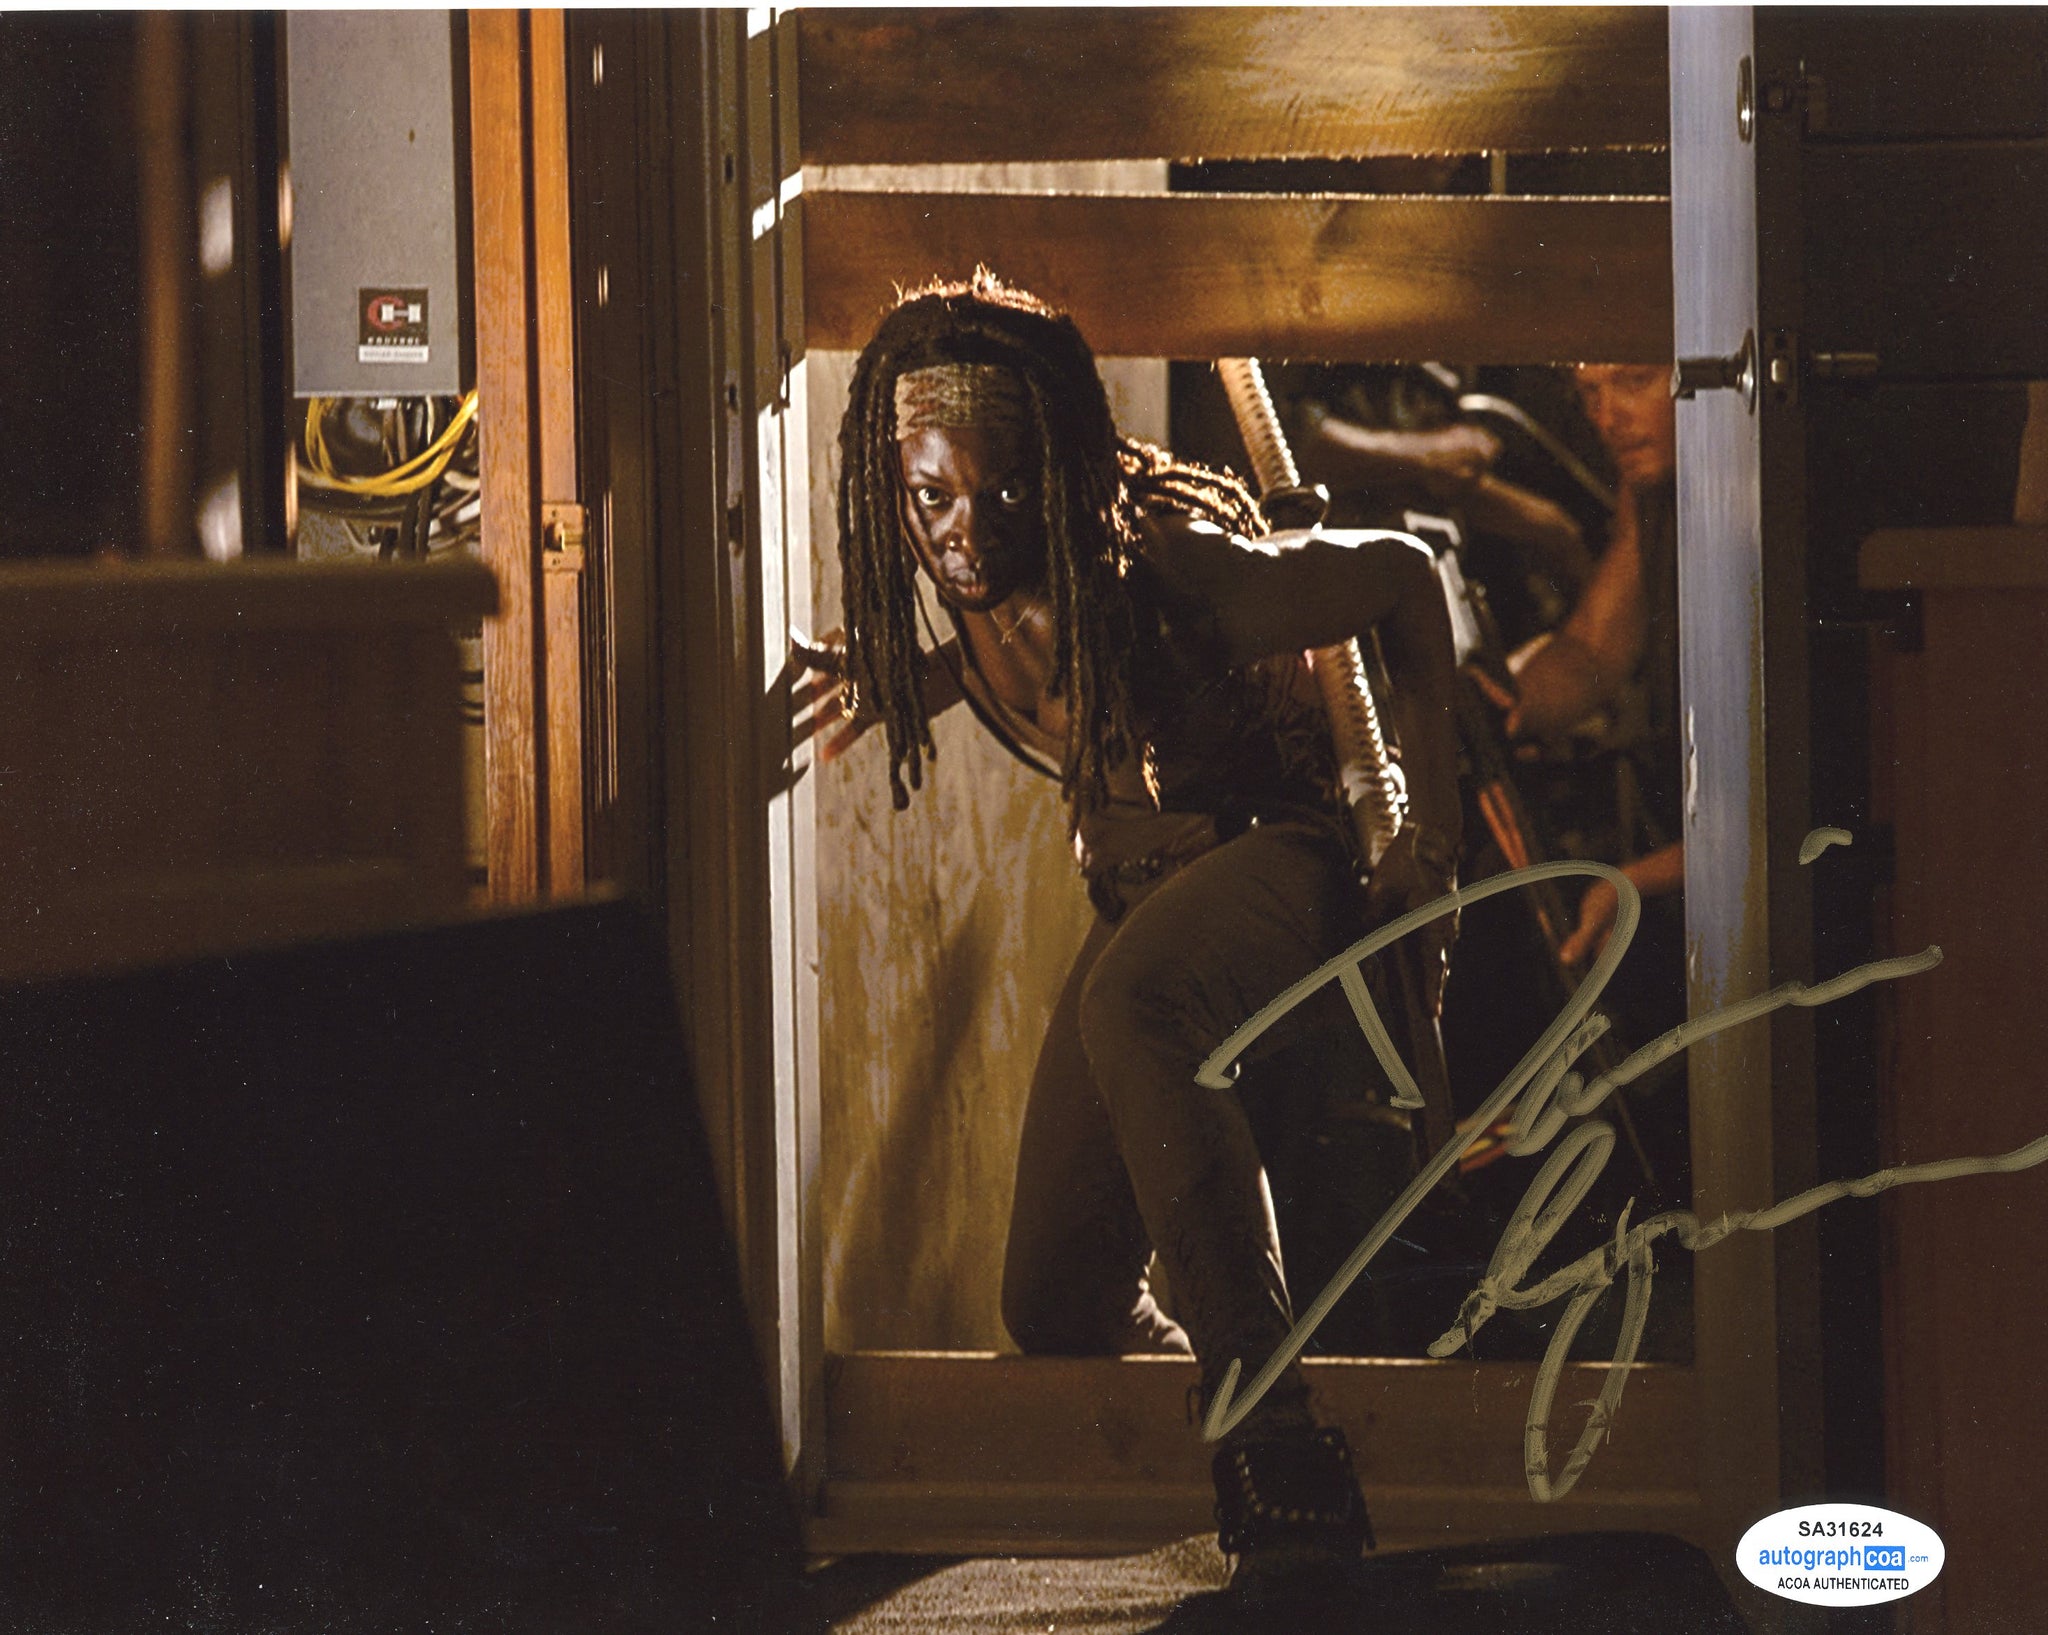 Danai Gurira Walking Dead Signed Autograph 8x10 Photo ACOA #7 - Outlaw Hobbies Authentic Autographs